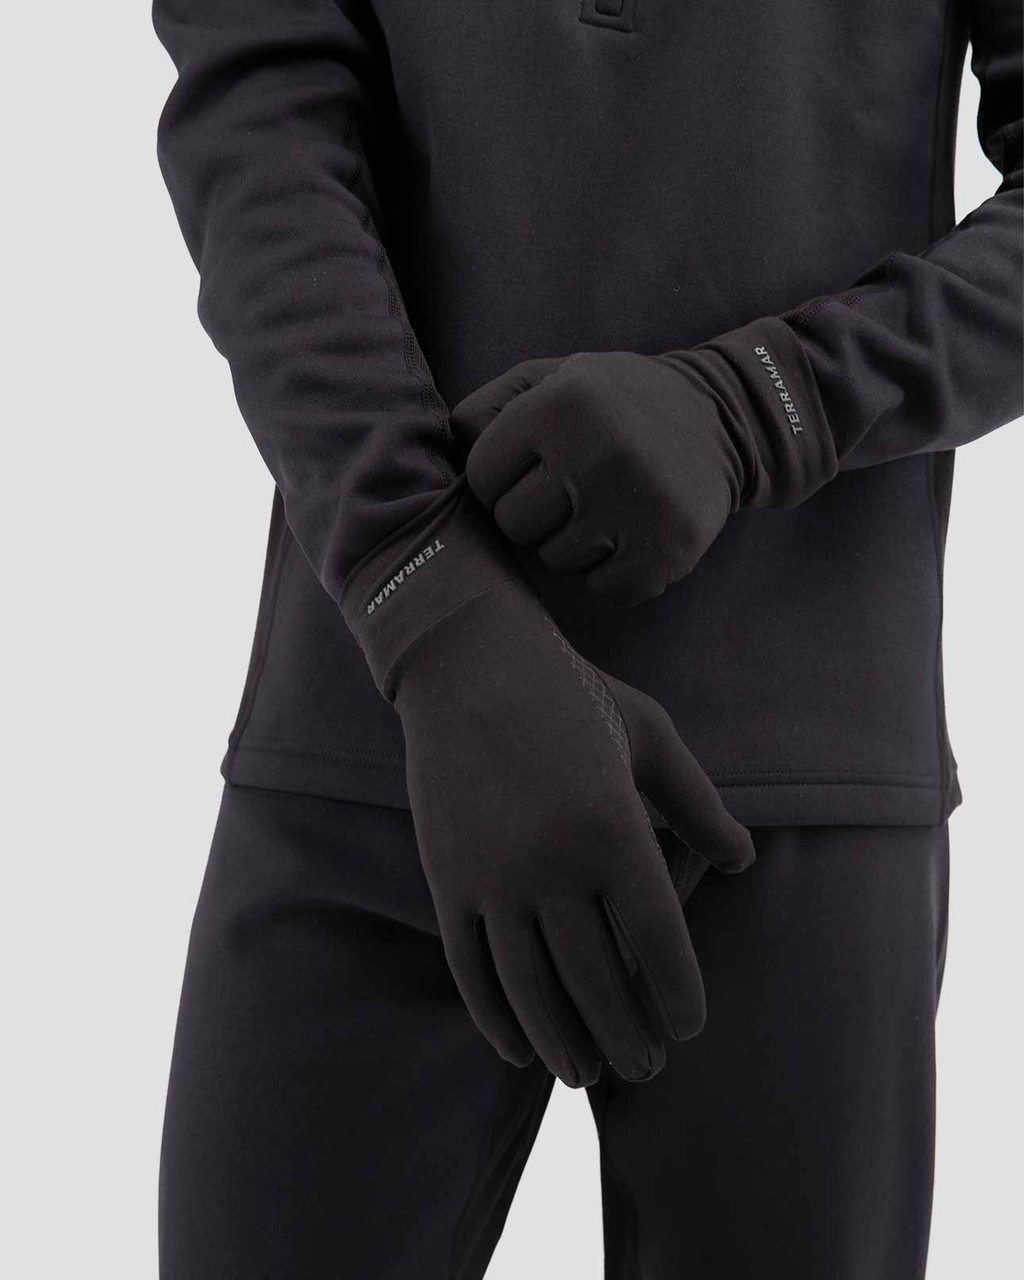 Terramar Thermolator Glove Liner 2.0 Black